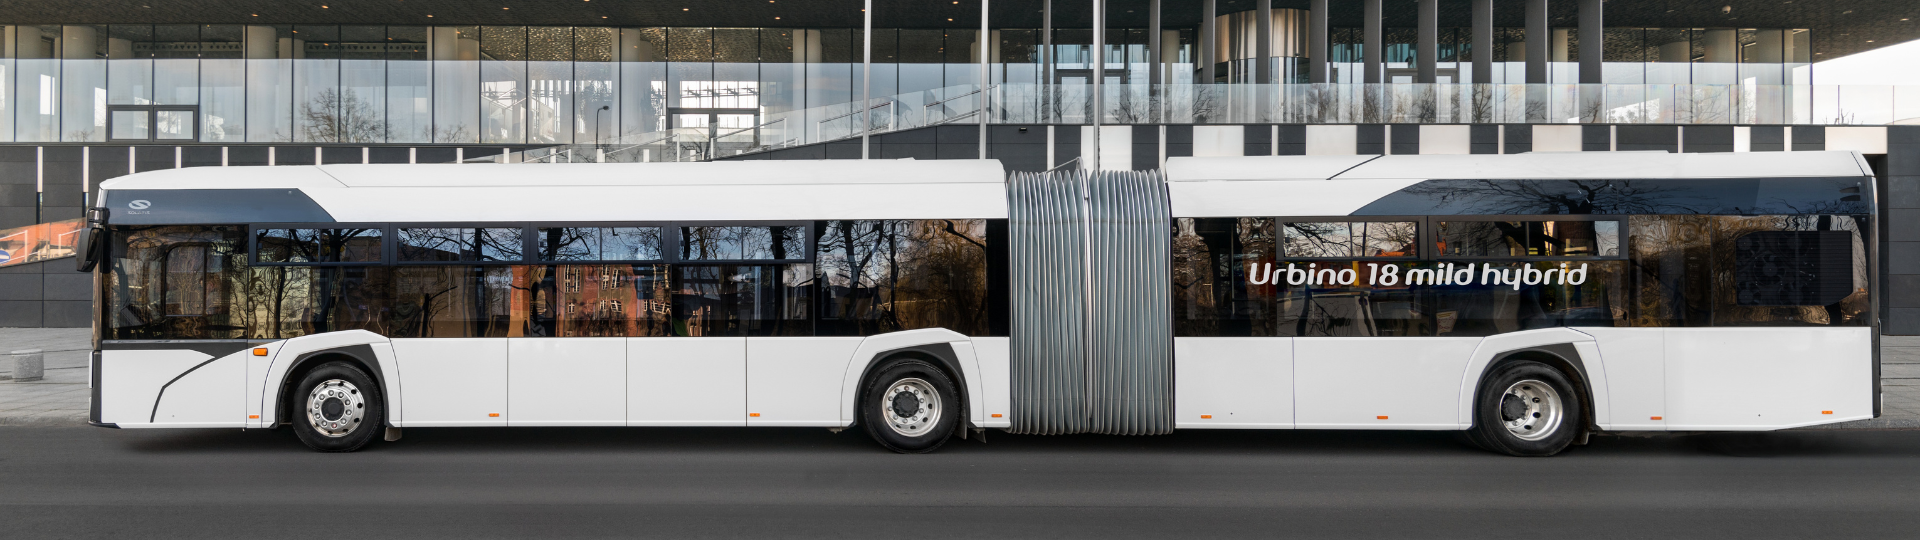 Solaris-Lodz-Orders-63-Solaris-Buses-in-Mild-Hybrid-Version.png